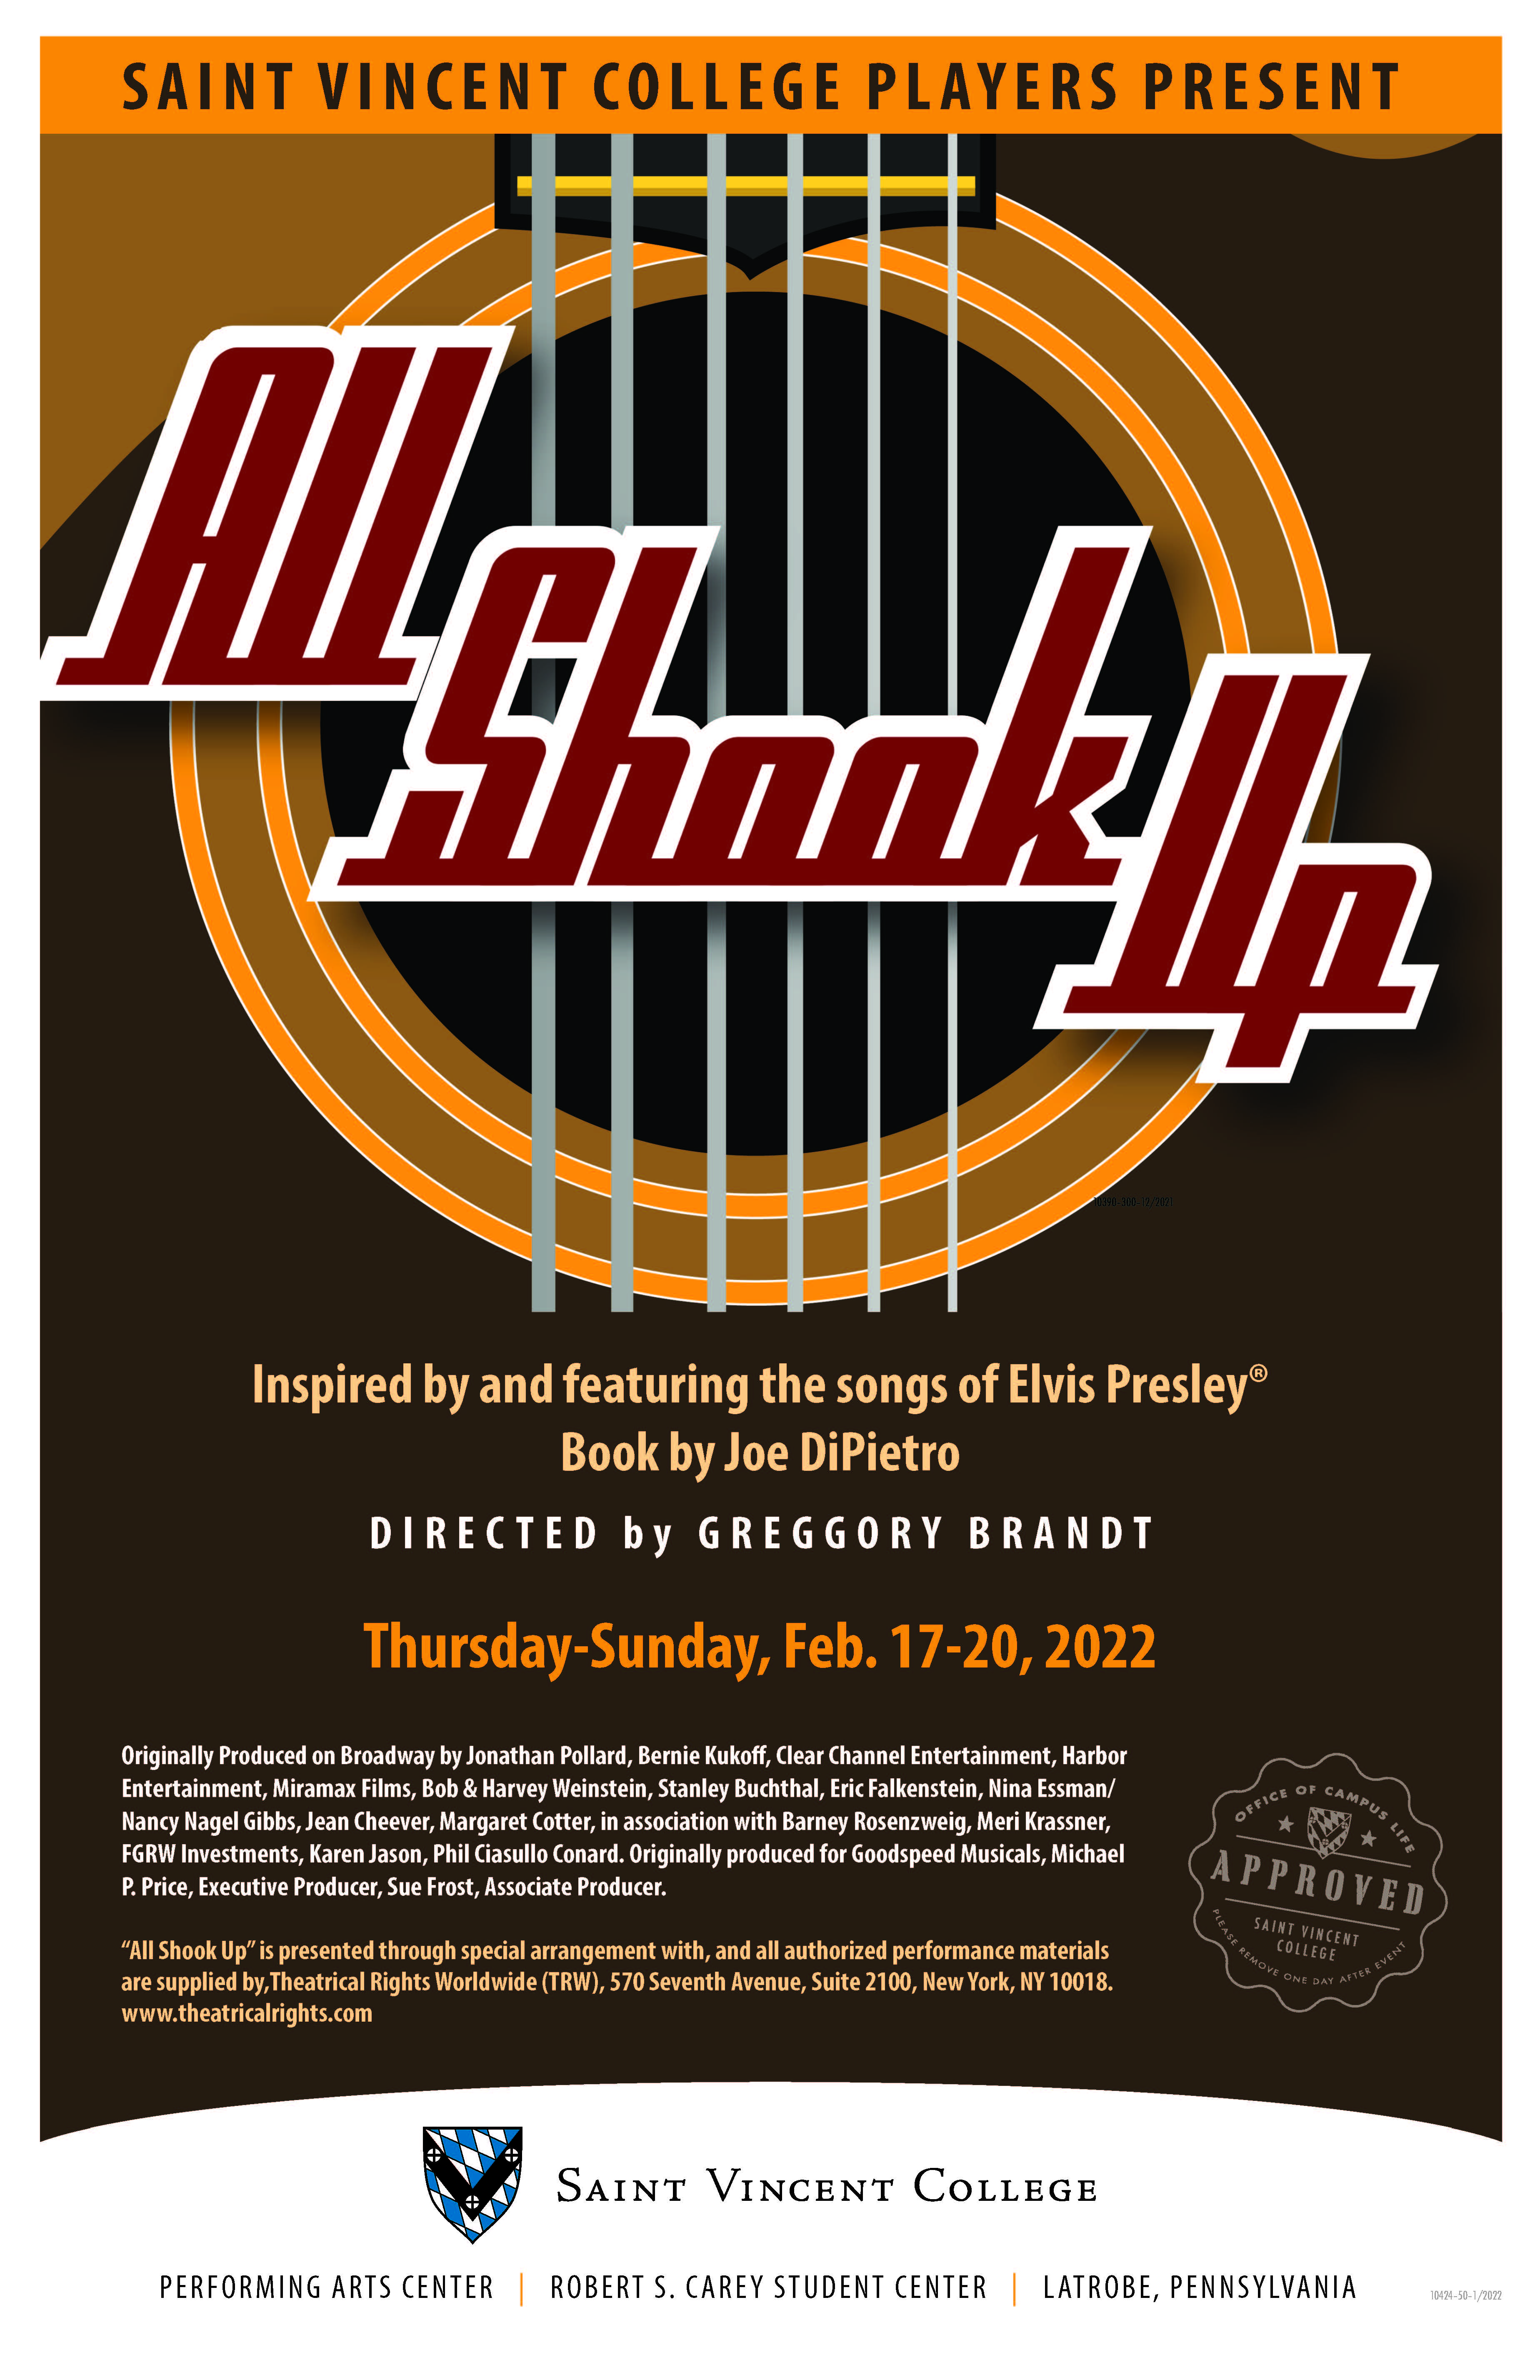 All Shook Up guitar poster